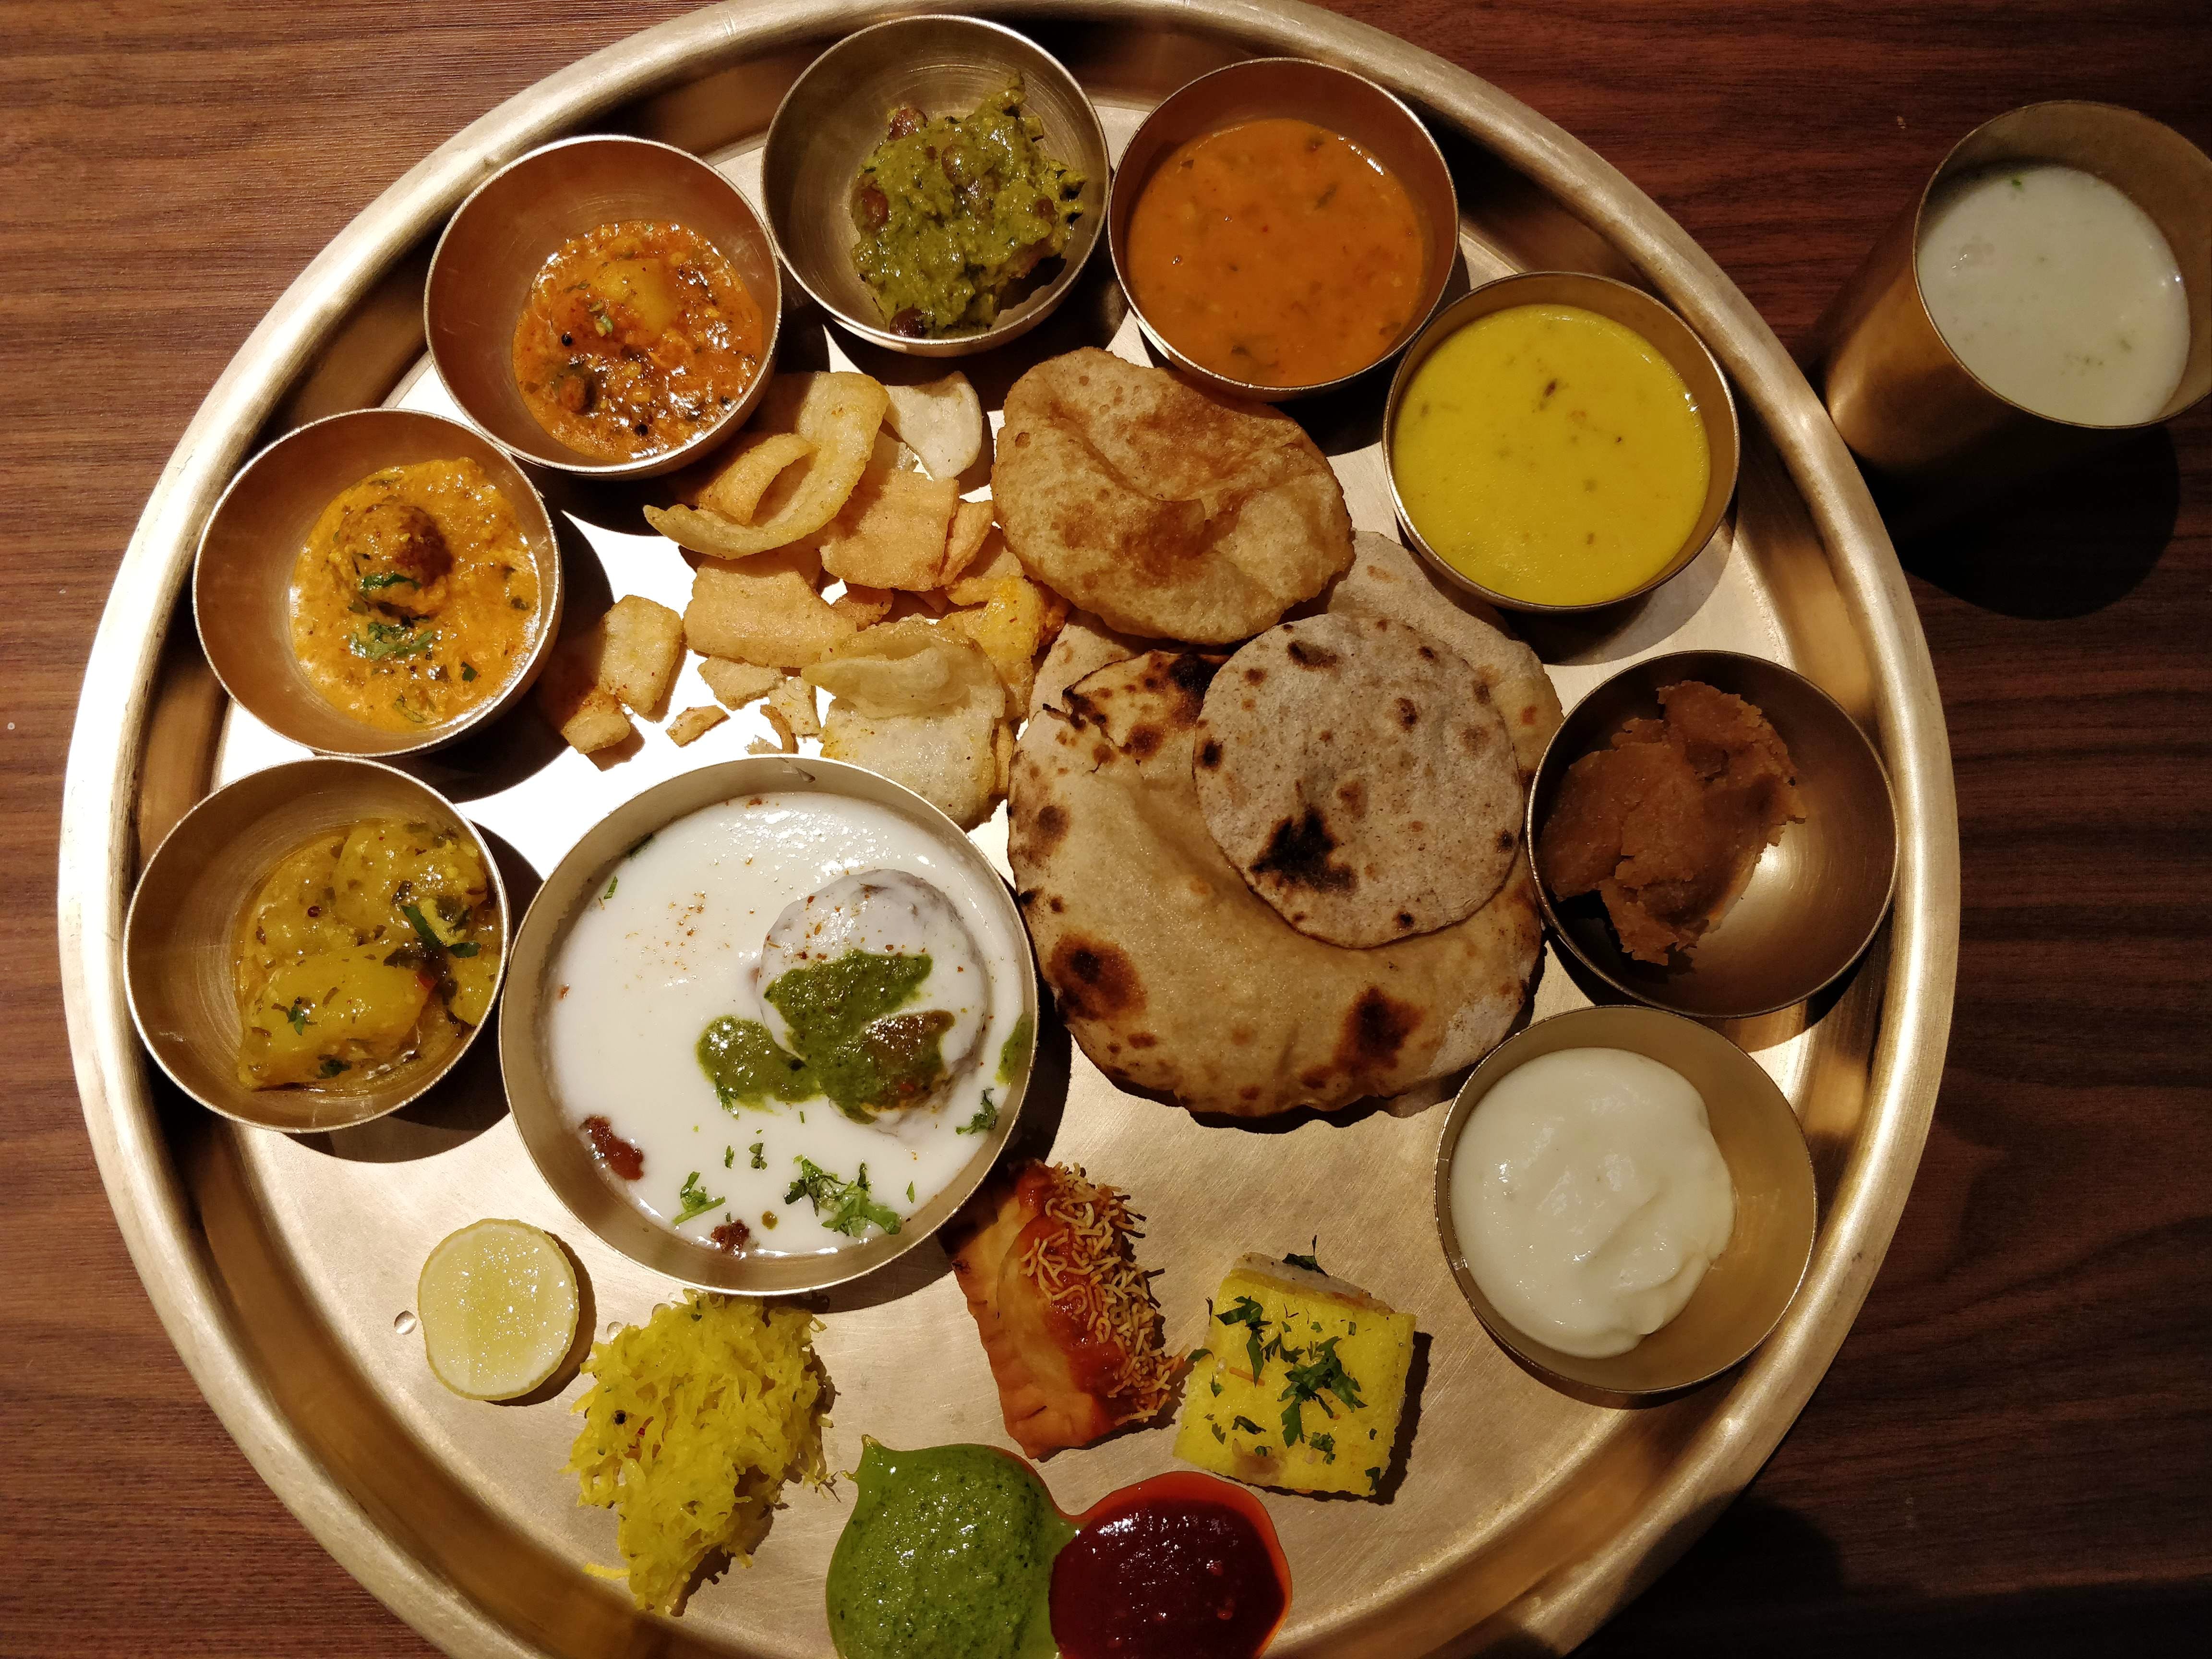 Dish,Food,Cuisine,Meal,Ingredient,Raita,Indian cuisine,Comfort food,Vegetarian food,Produce